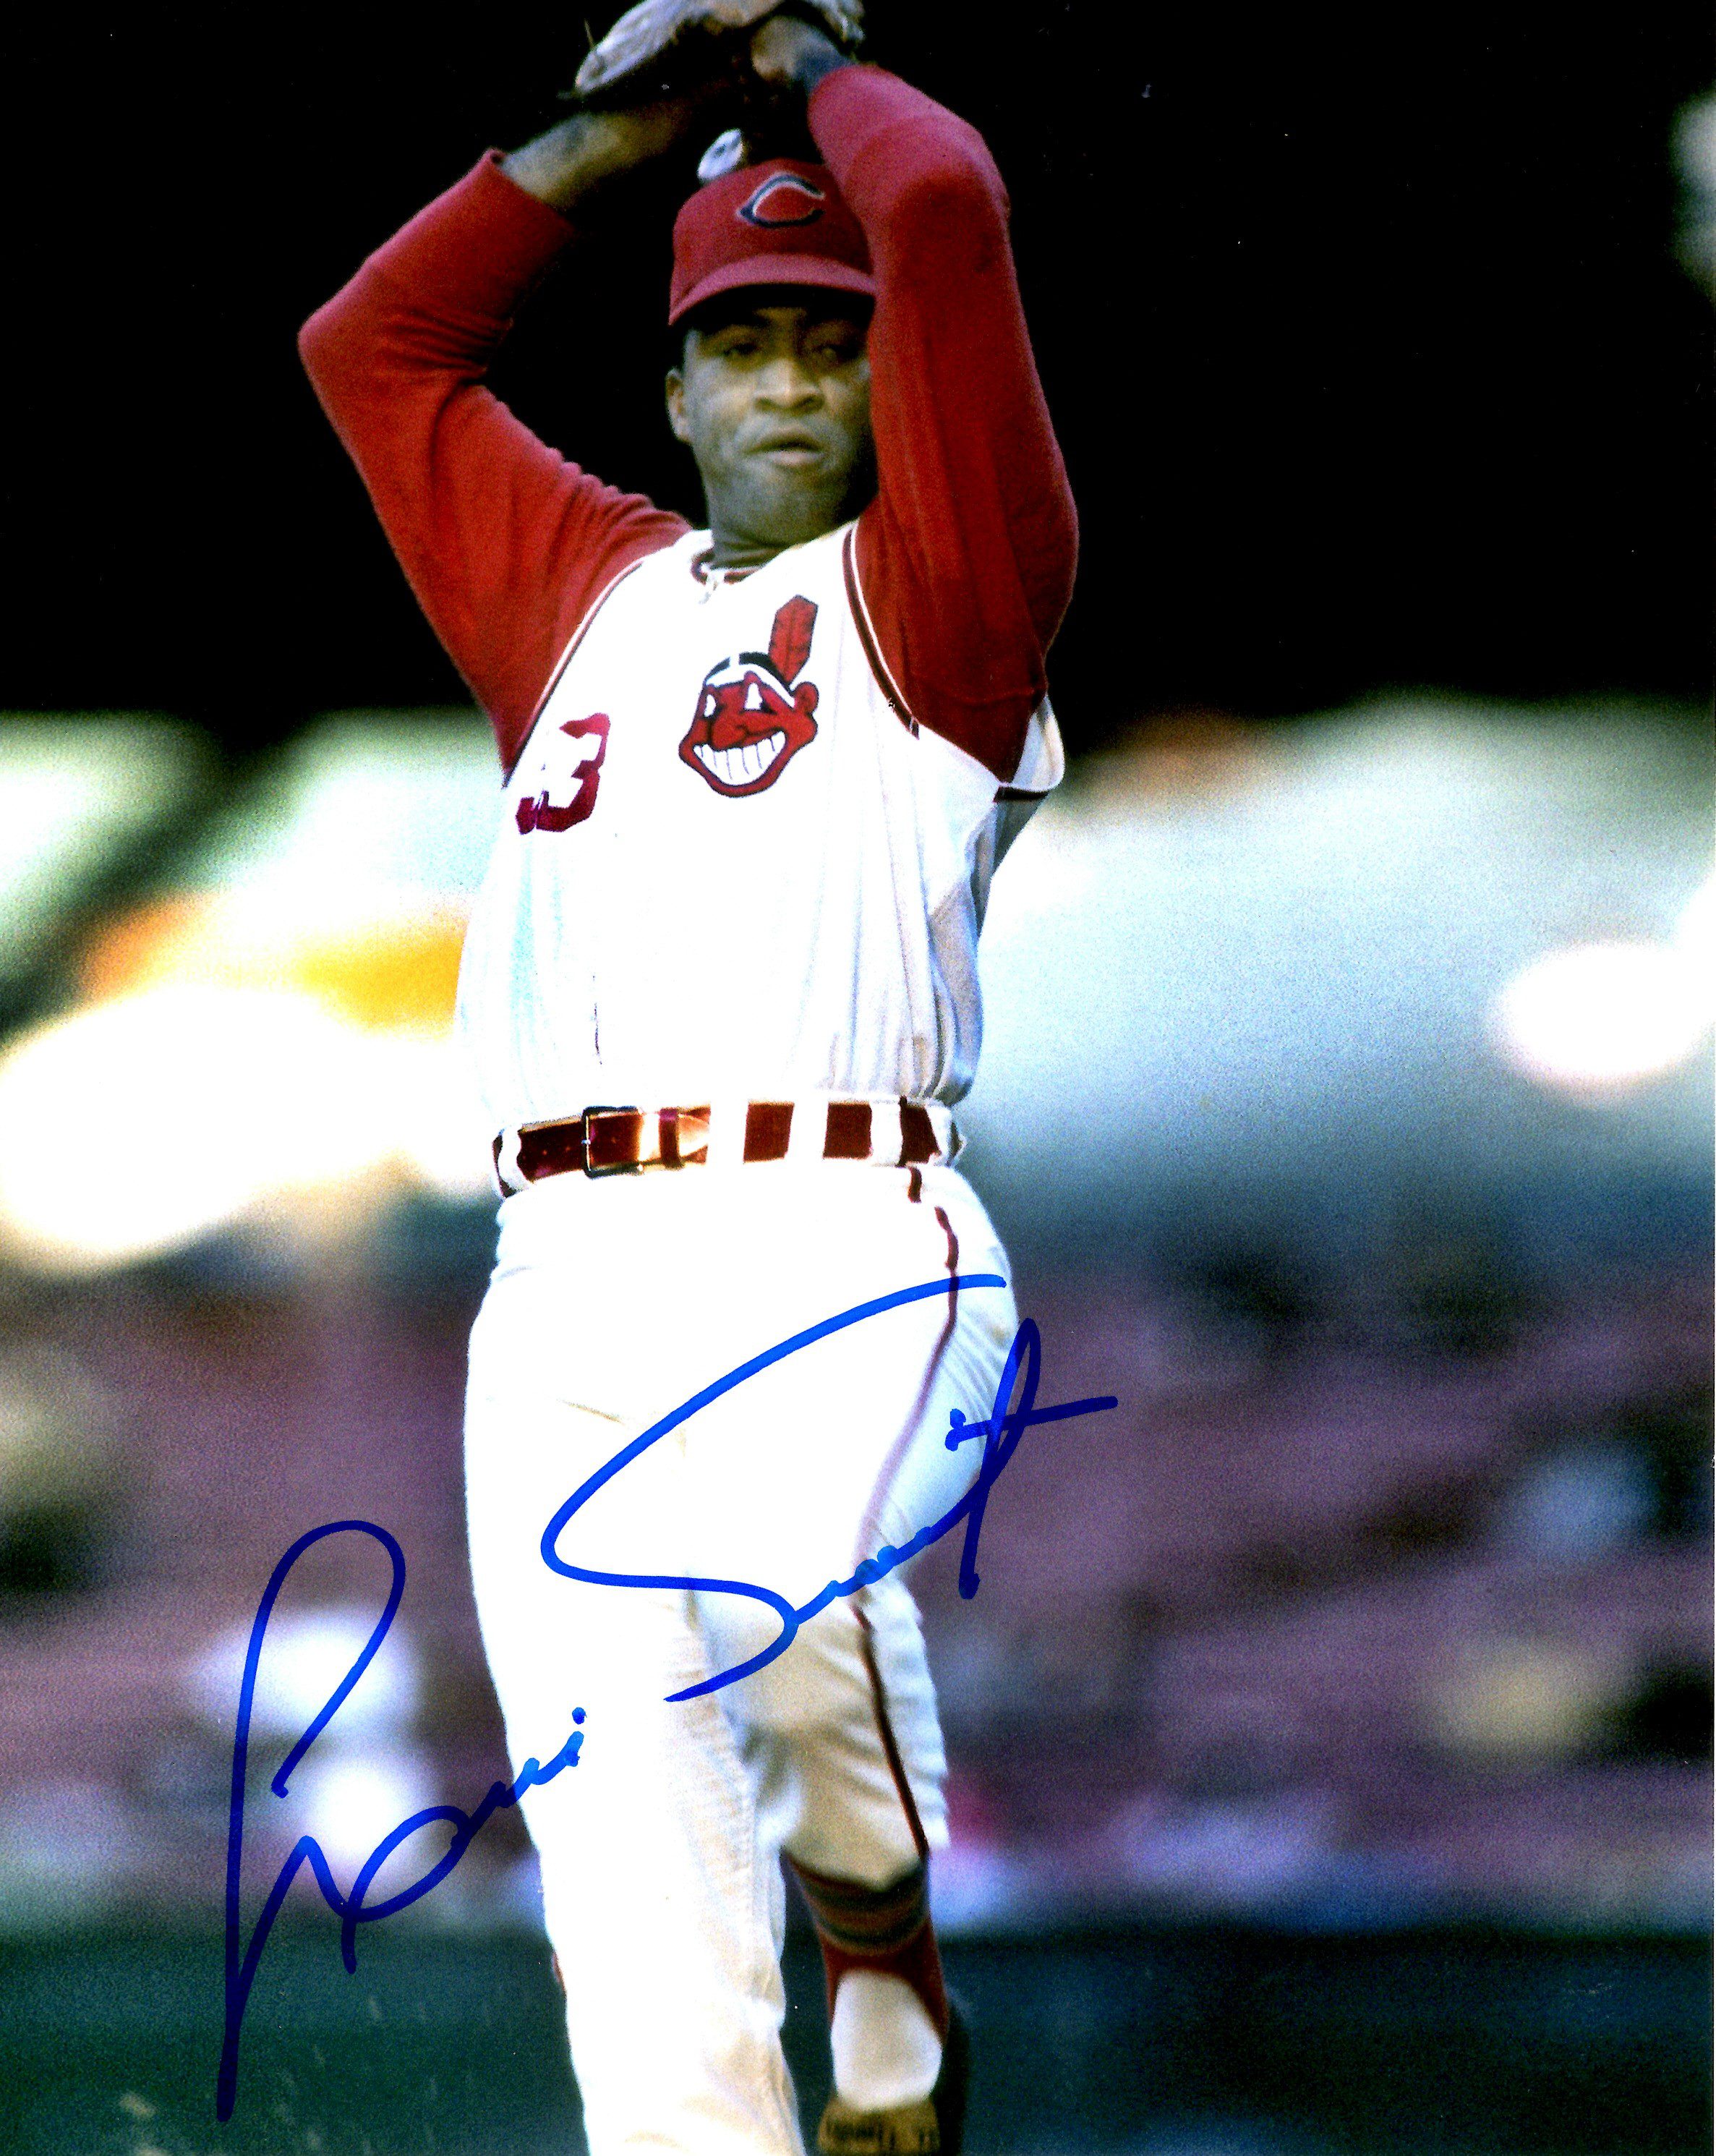 Tiant, Luis Autographed Baseball